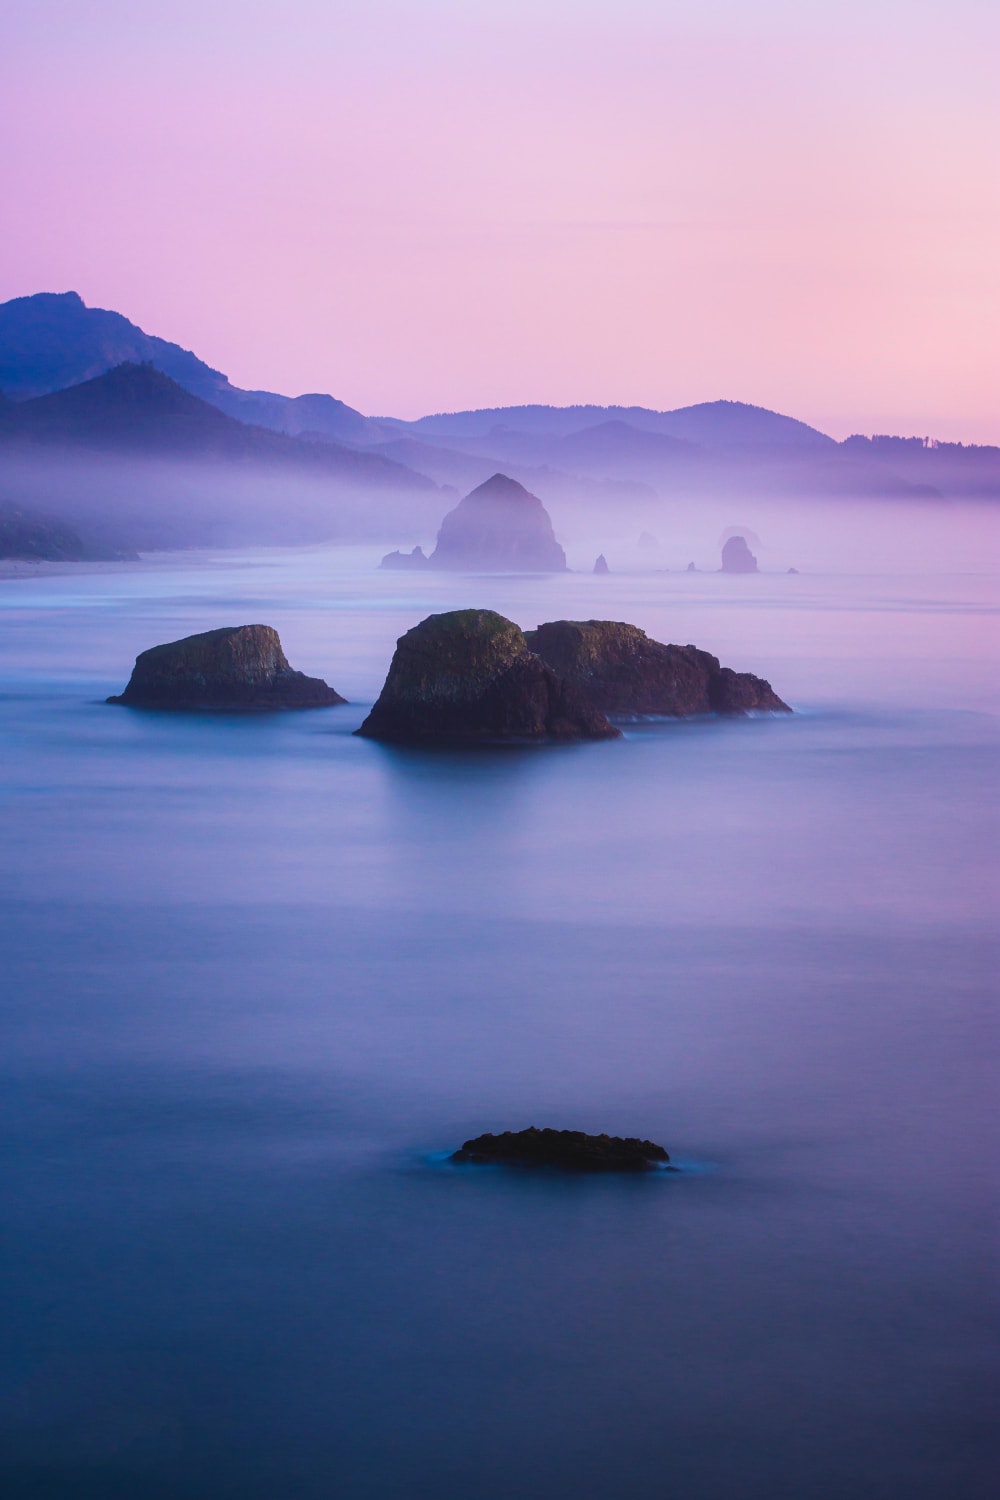 A dreamy twilight on the Oregon coast